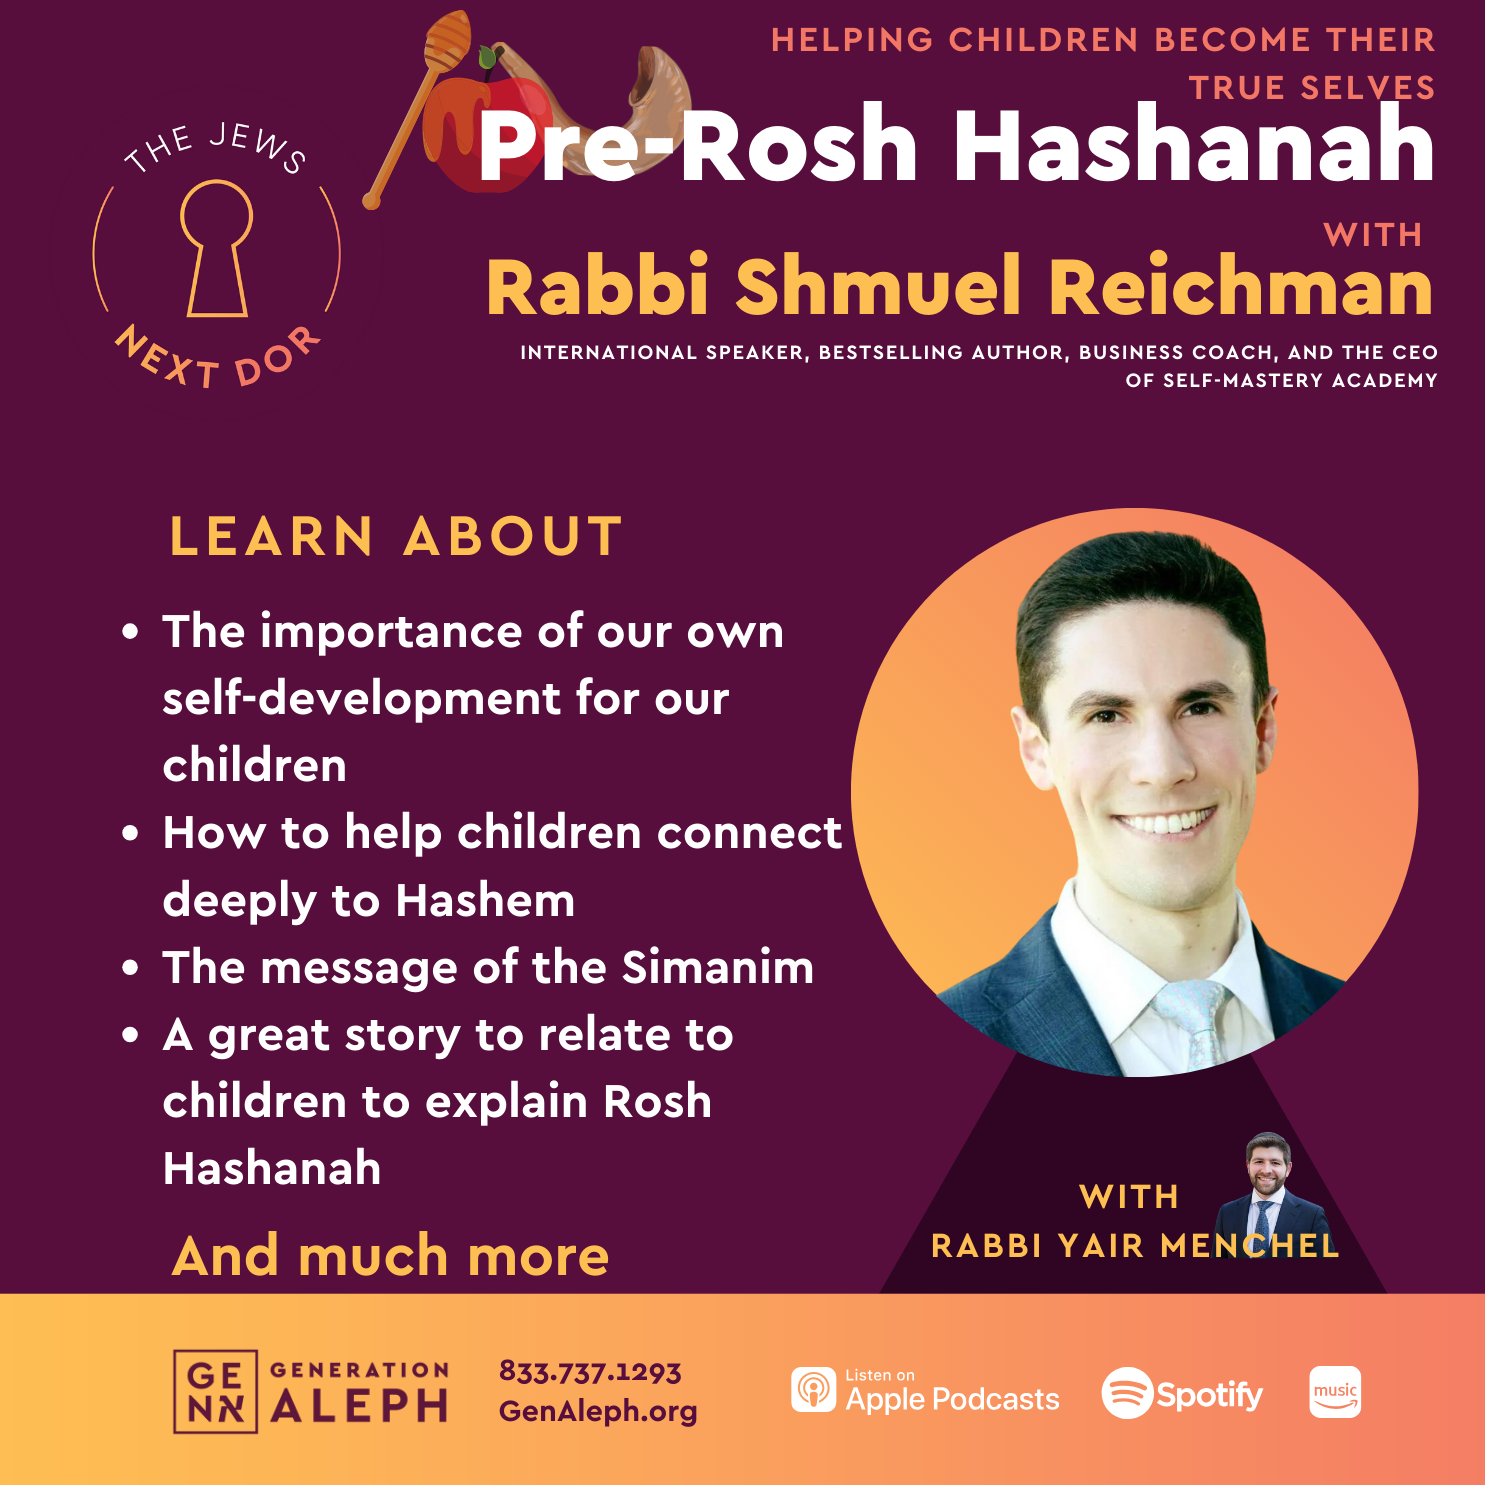 Pre-Rosh Hashanah Parenting with Rabbi Shmuel Reichman